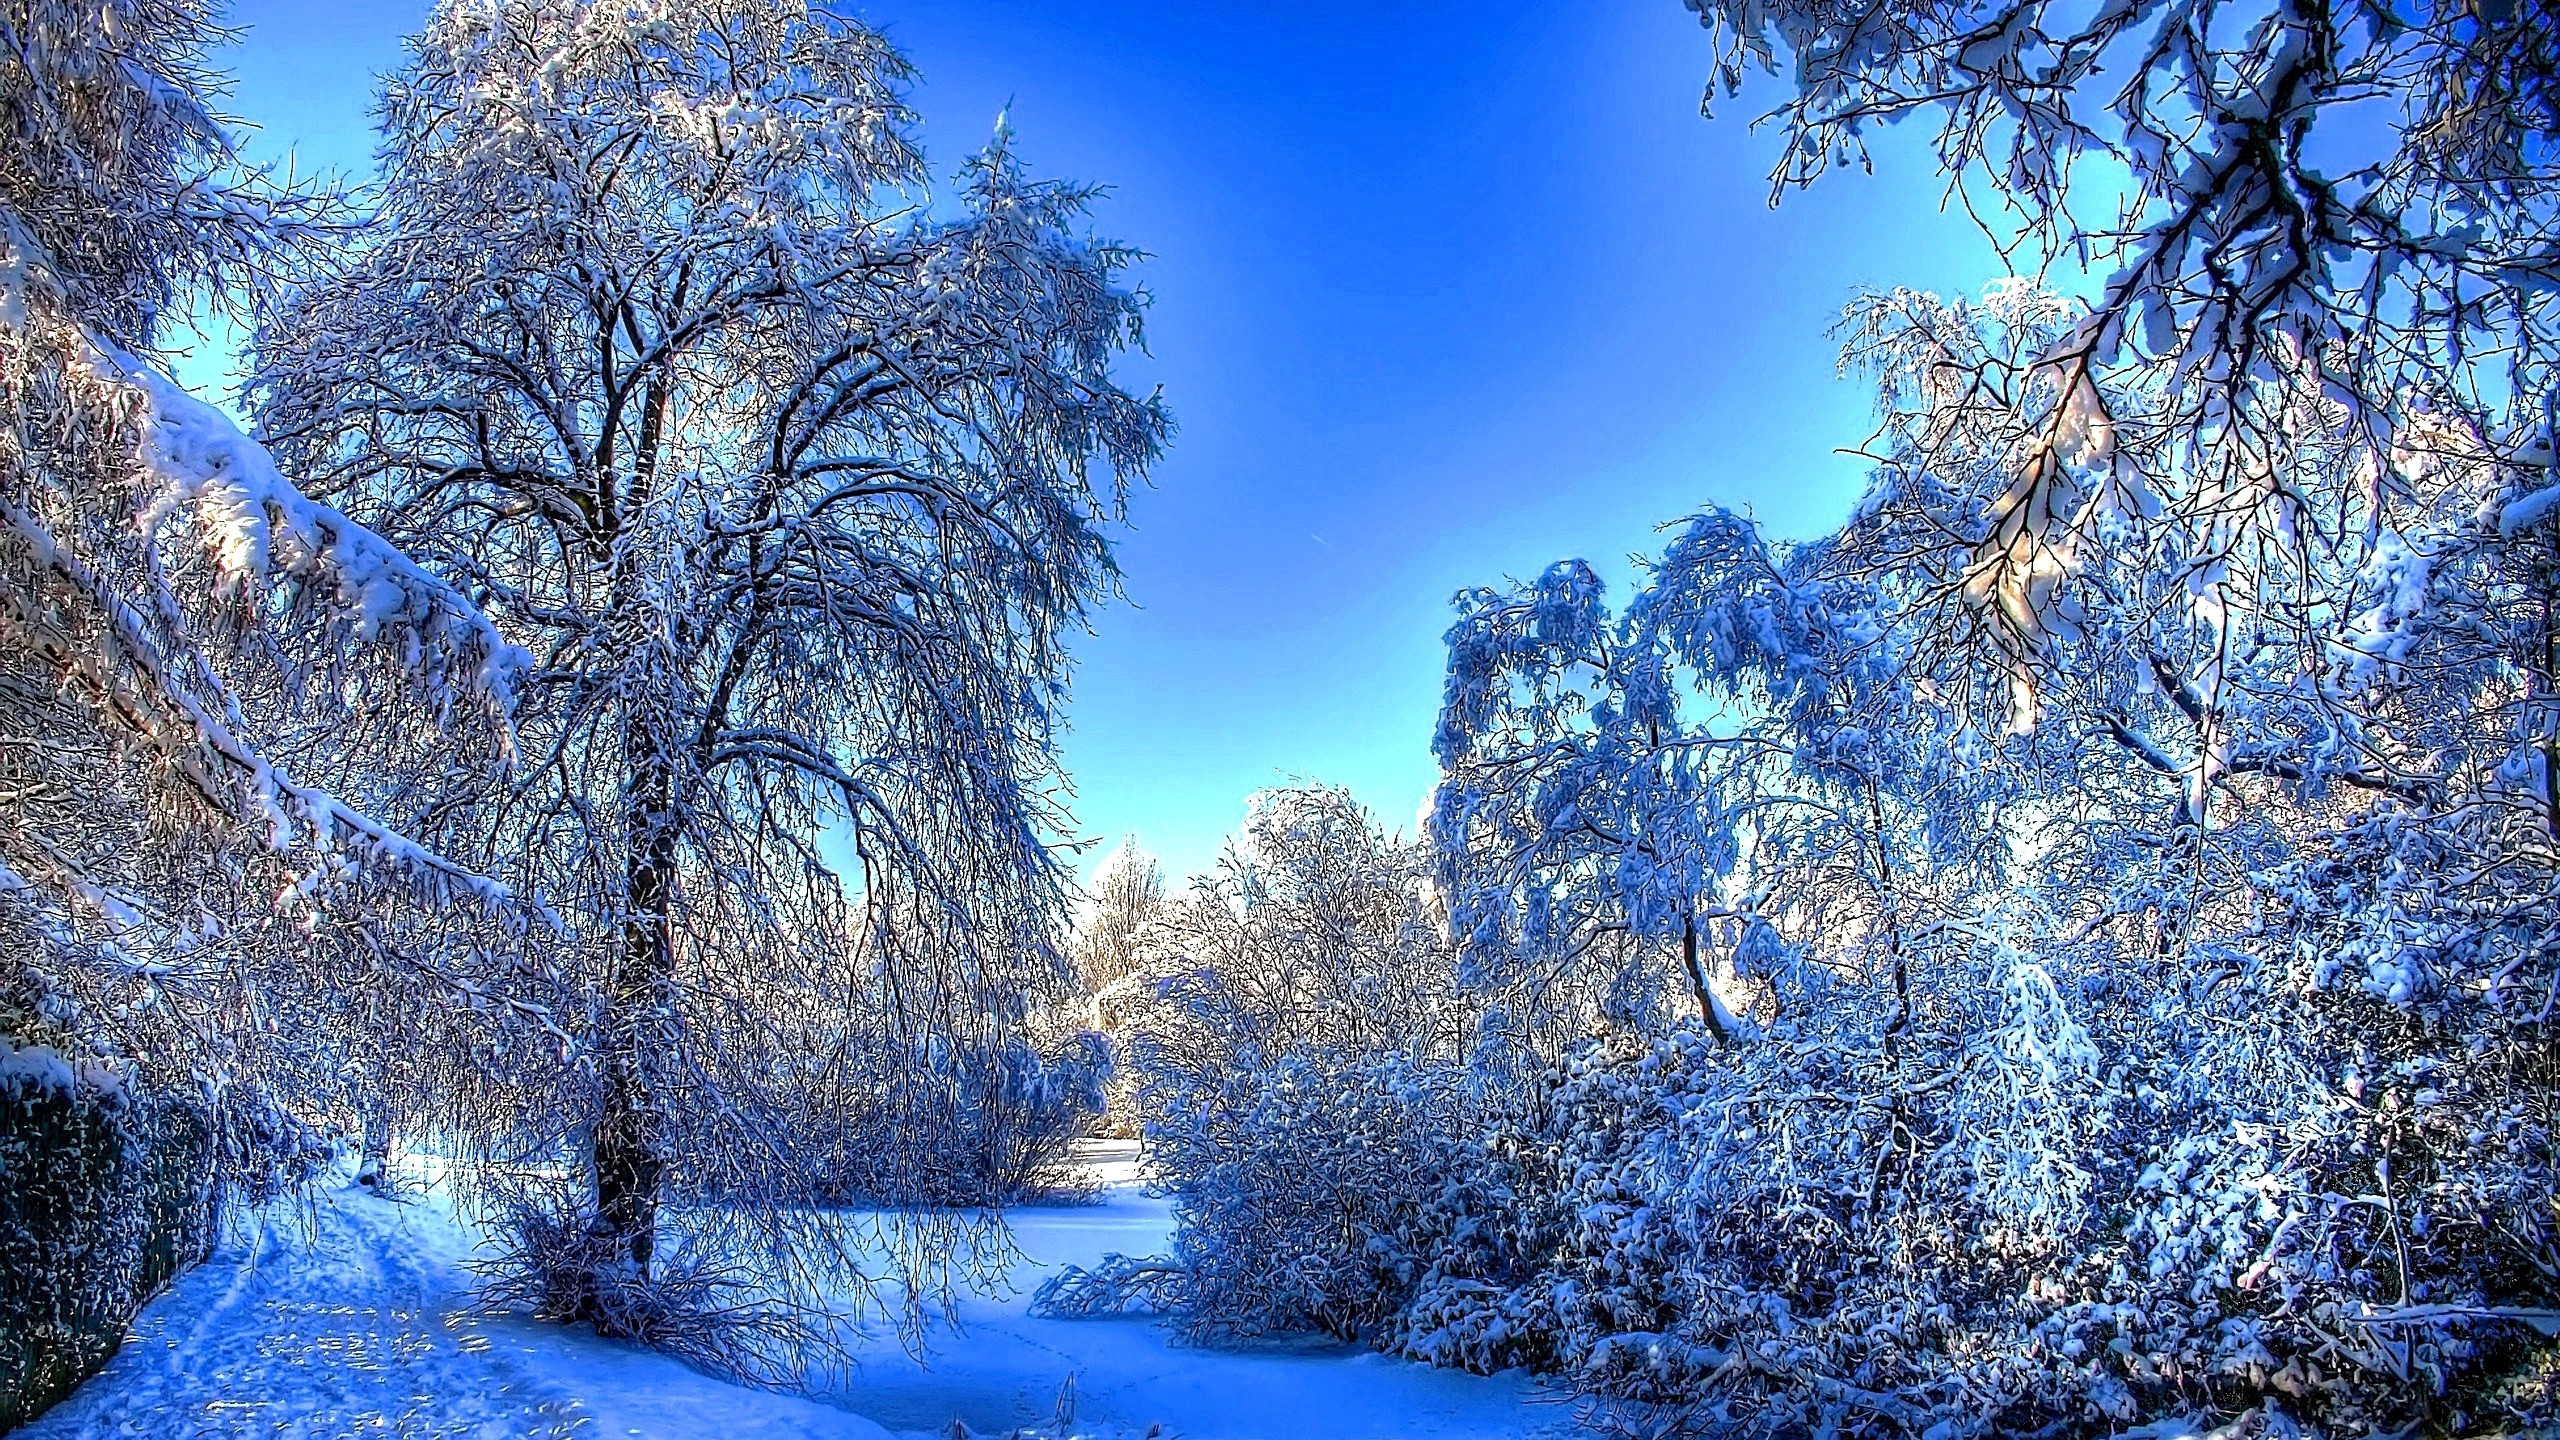 Winter Snow Landscape for 2560x1440 HDTV resolution